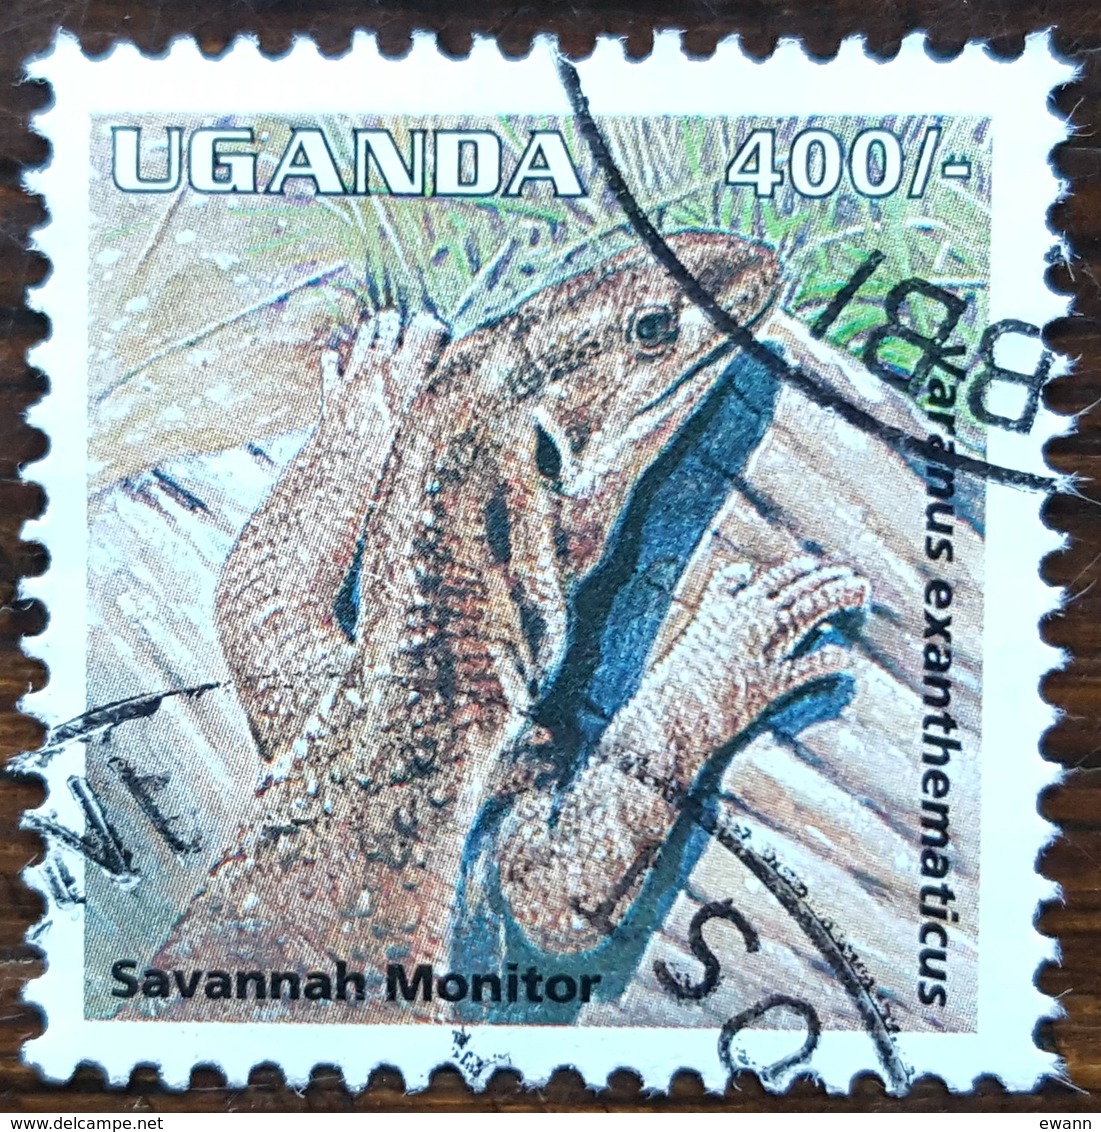 Ouganda - YT N°1236 - Faune / Reptiles - 1995 - Oblitéré - Uganda (1962-...)